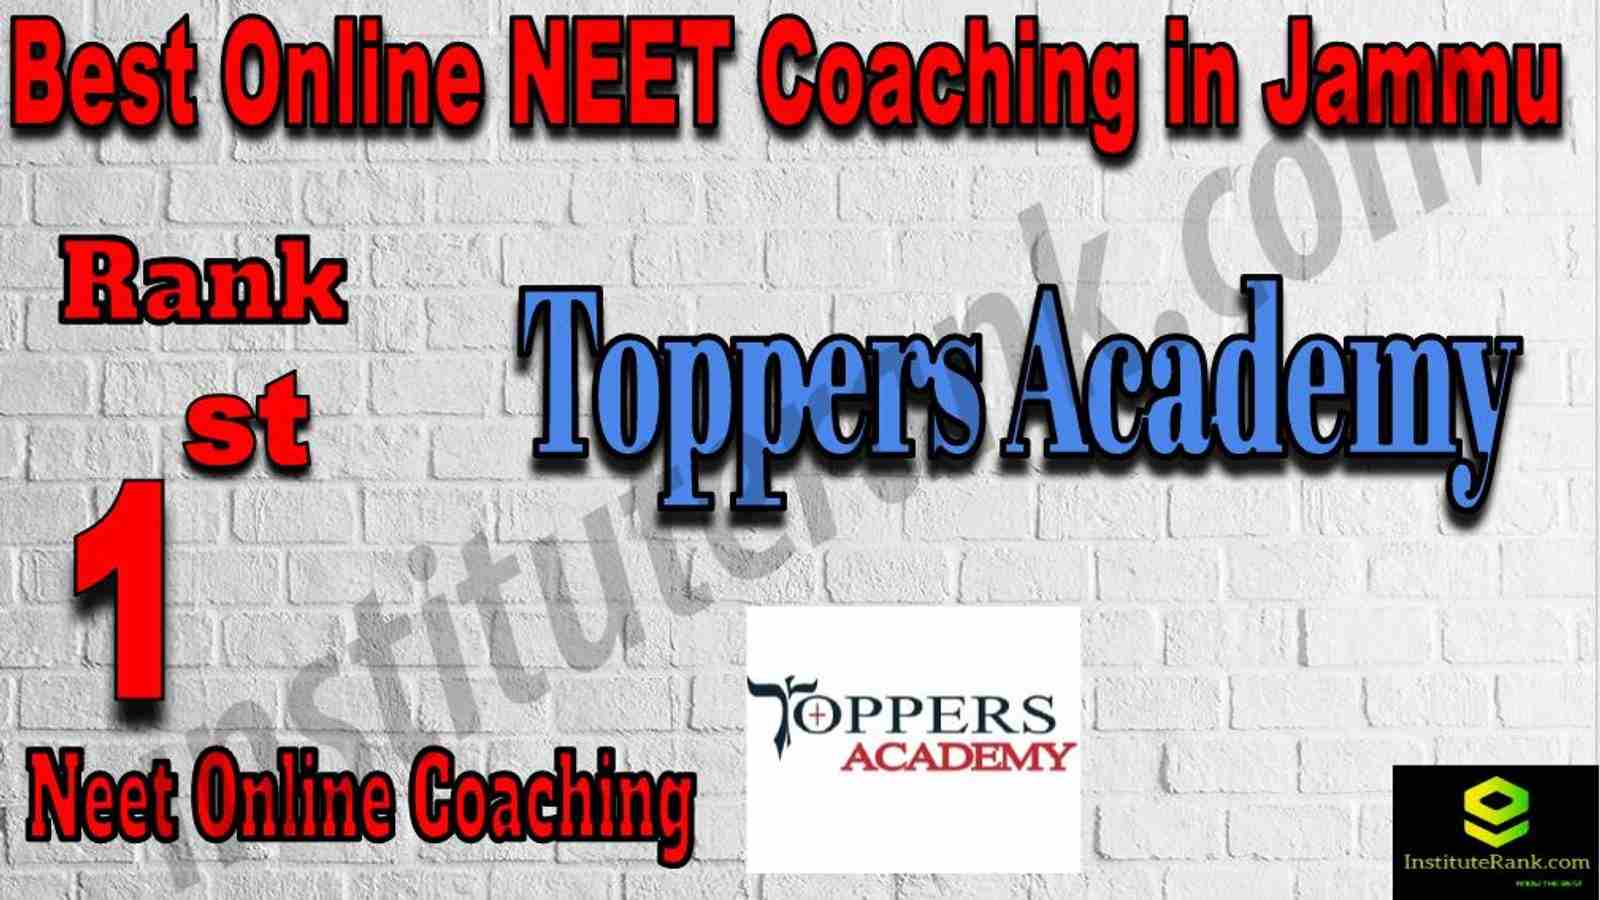 1st Best Online Neet Coaching in Jammu